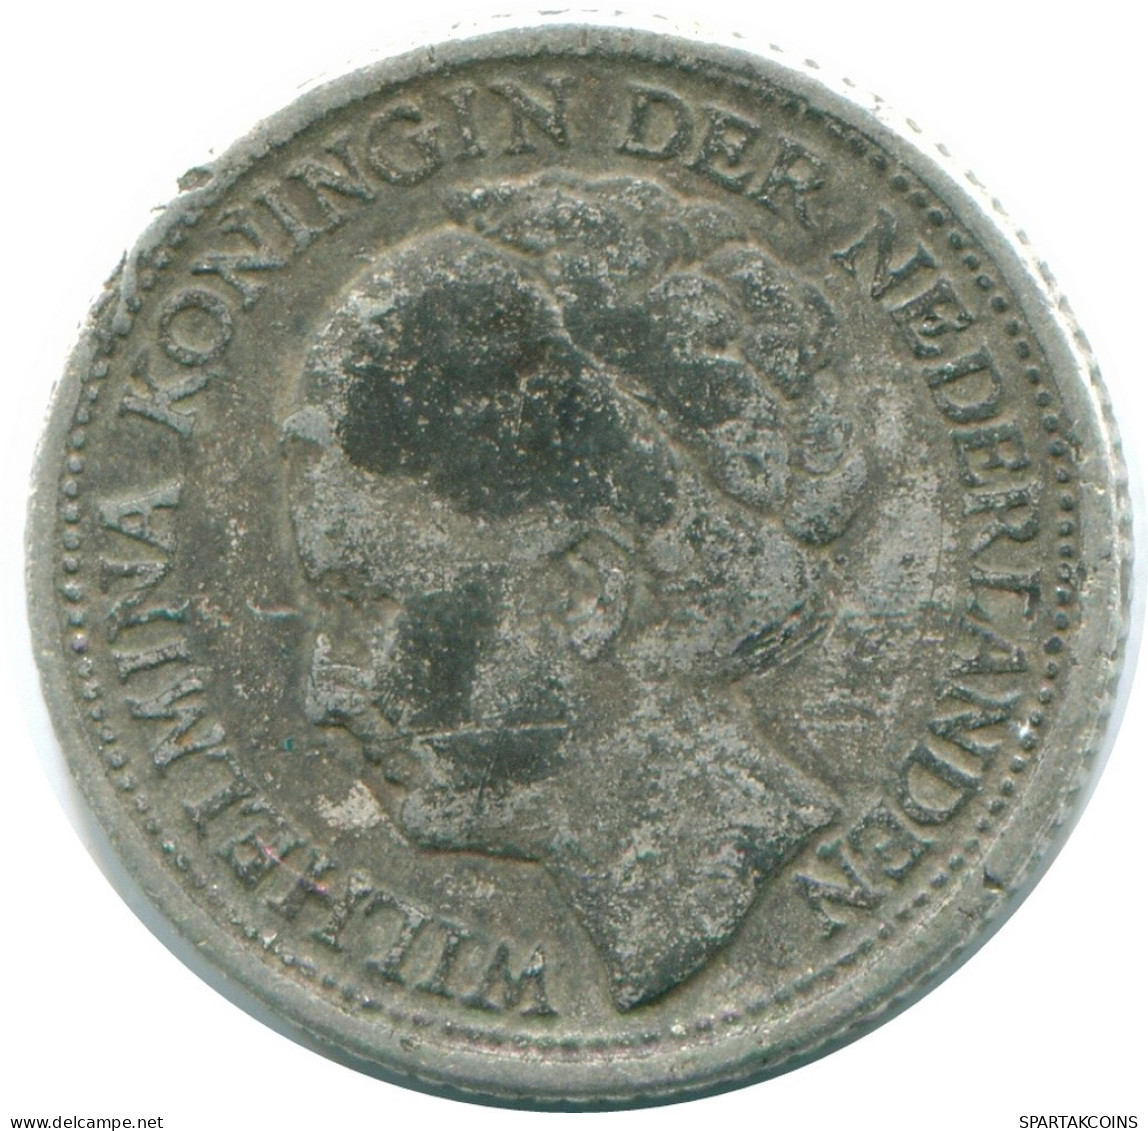 1/4 GULDEN 1944 CURACAO Netherlands SILVER Colonial Coin #NL10682.4.U.A - Curacao